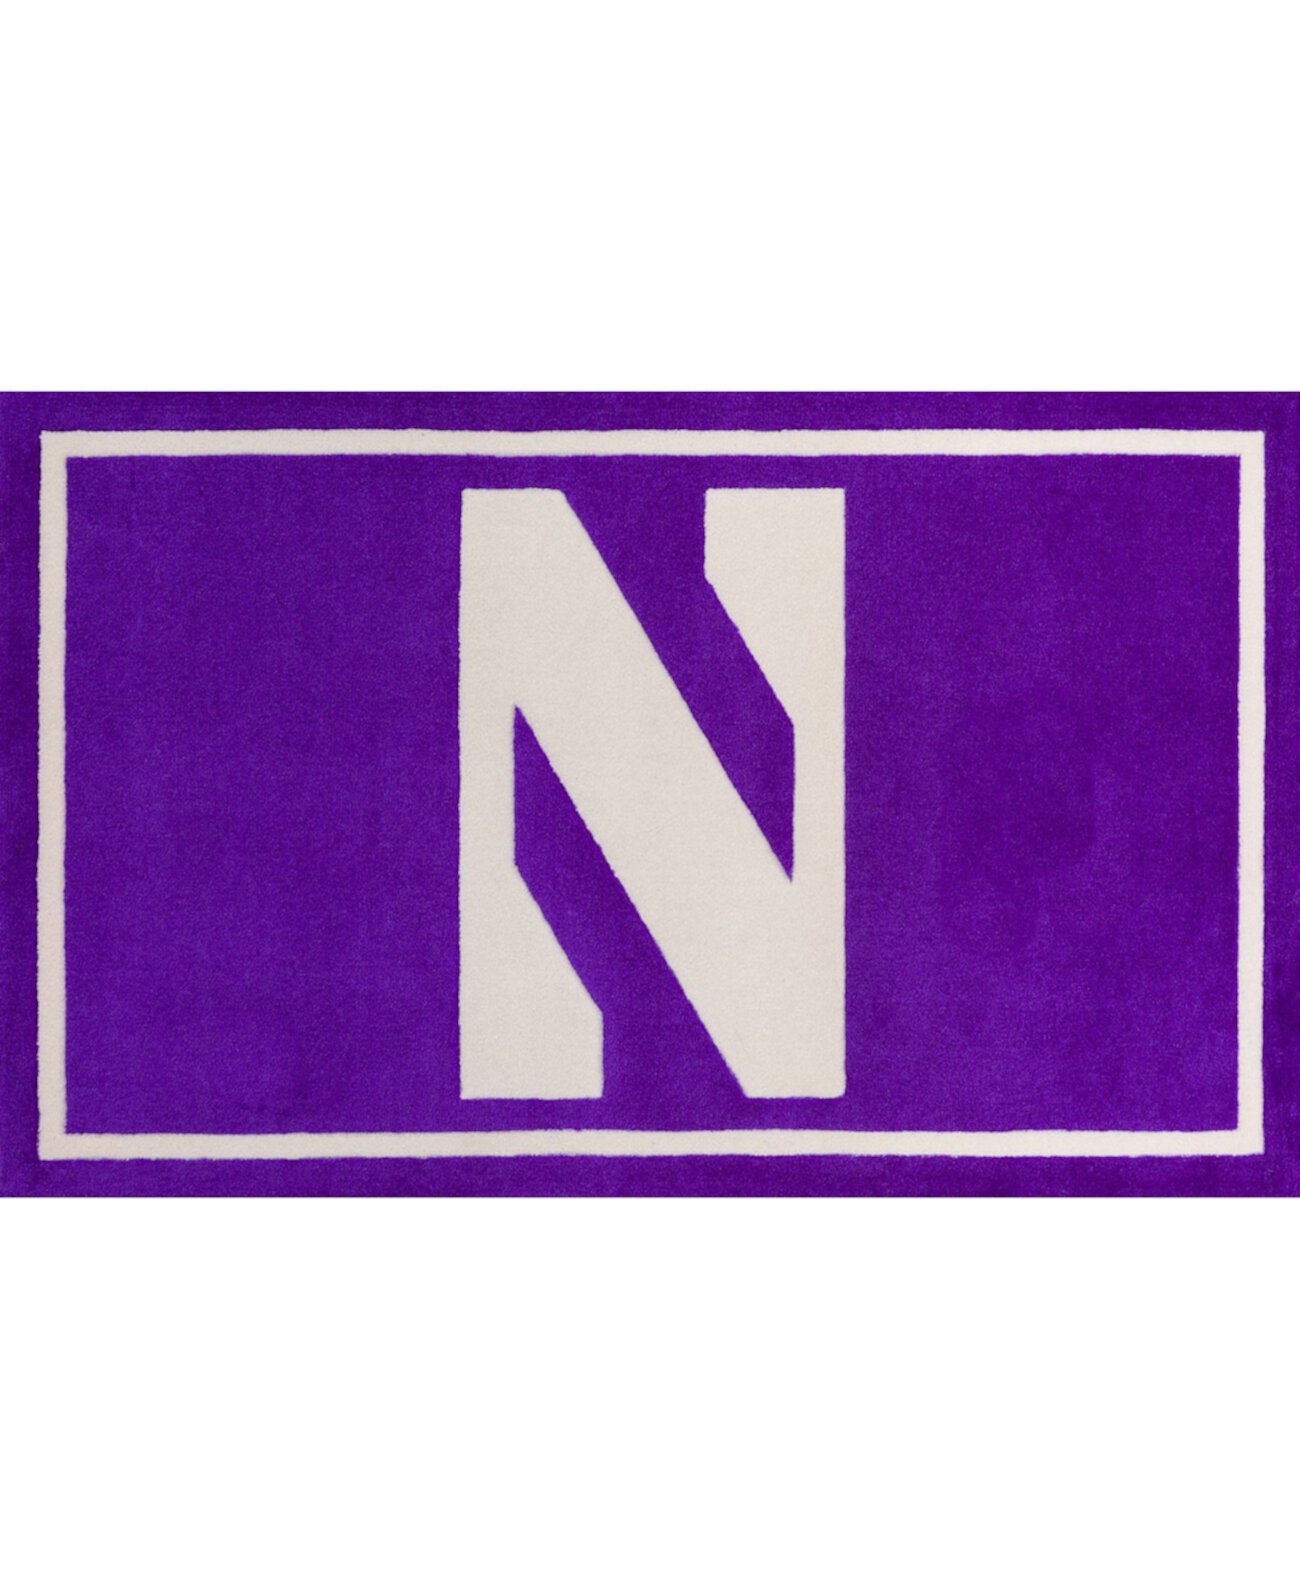 Коврик Northwestern Colnw Purple размером 1 фут 8 x 2 фута 6 дюймов Luxury Sports Rugs